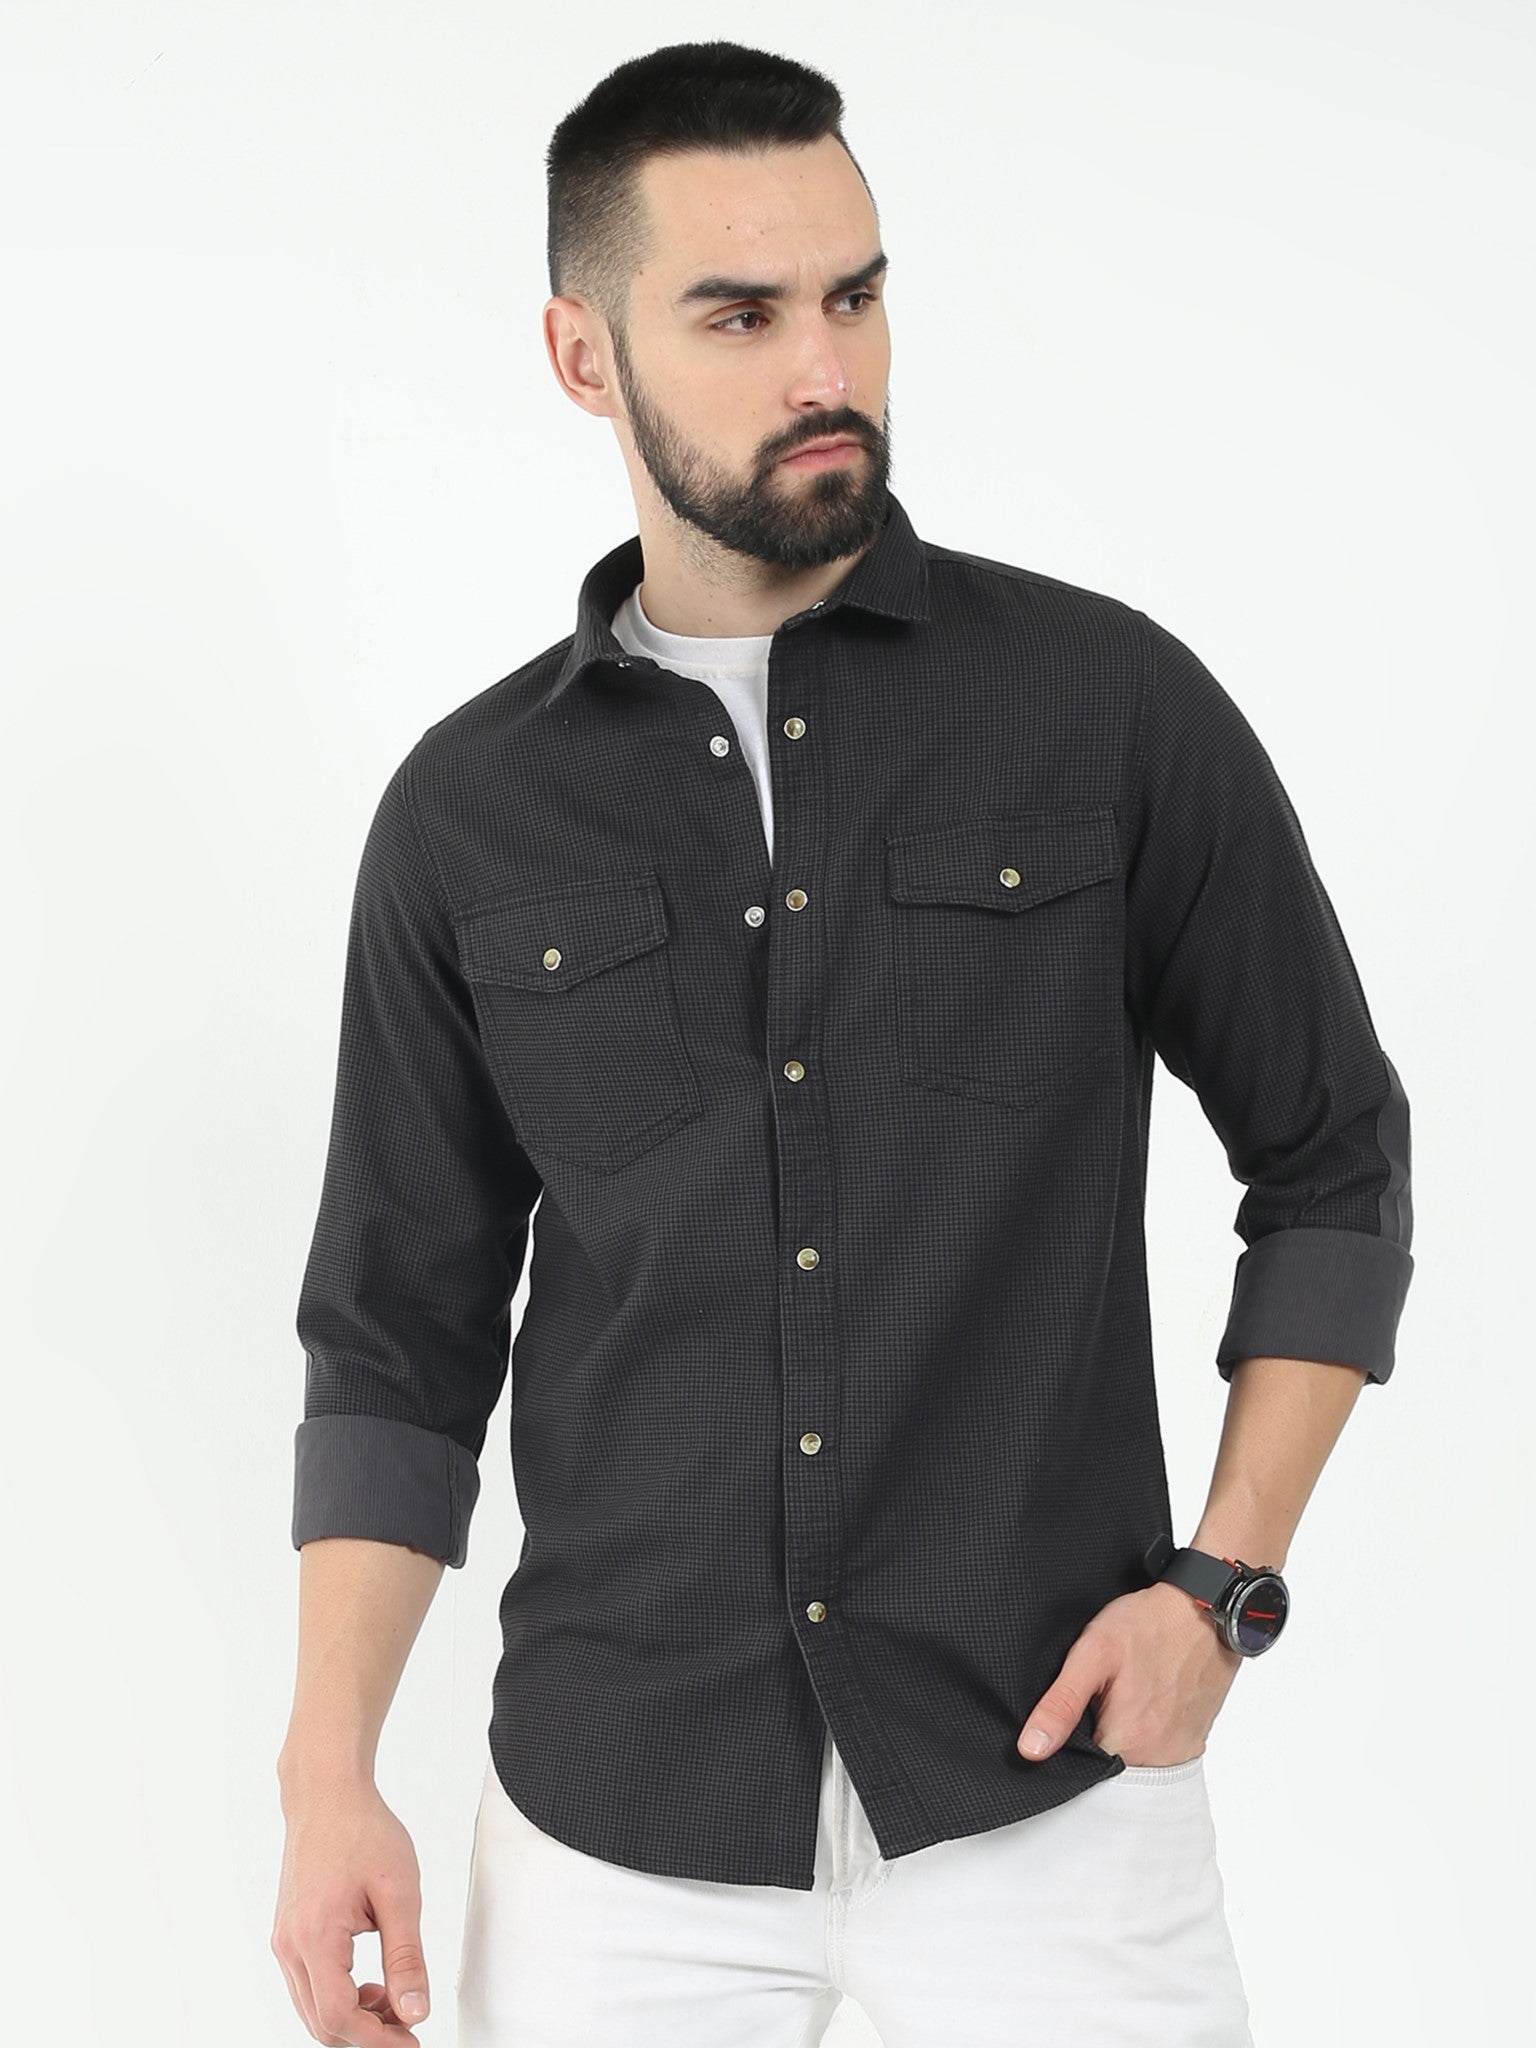 Elbow Patch Black Shirt for Men